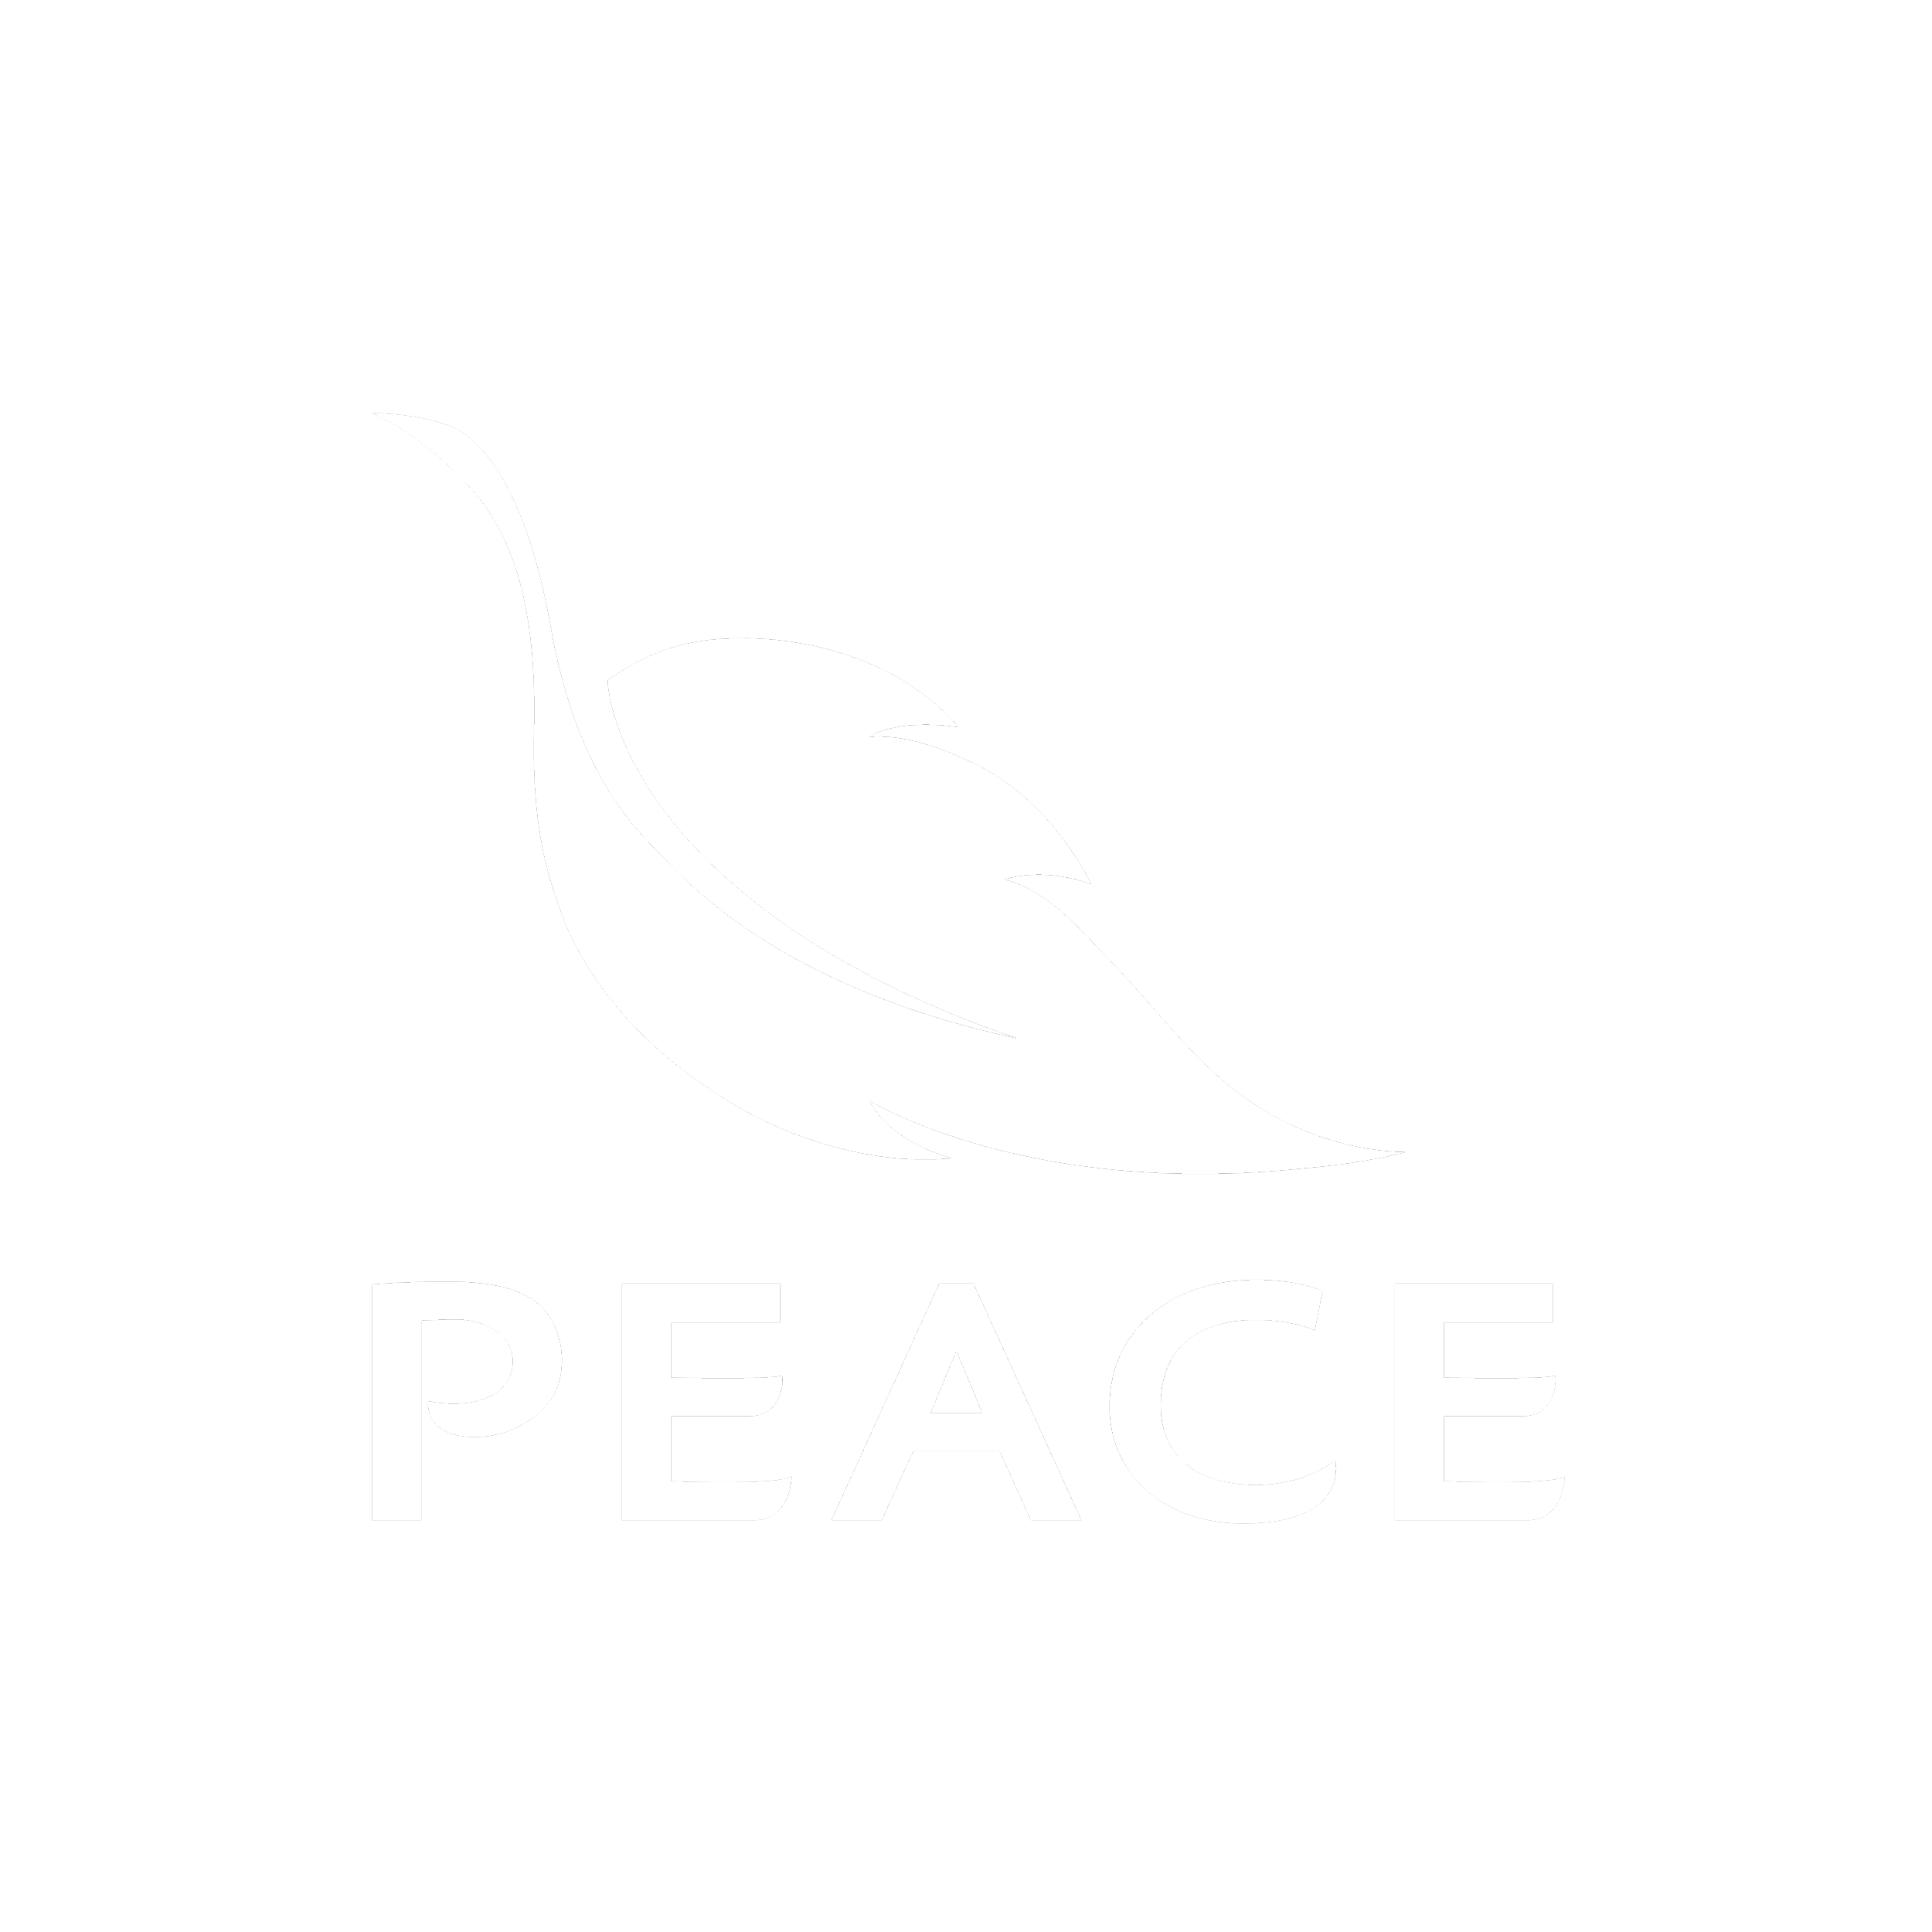 PEACE LOGO